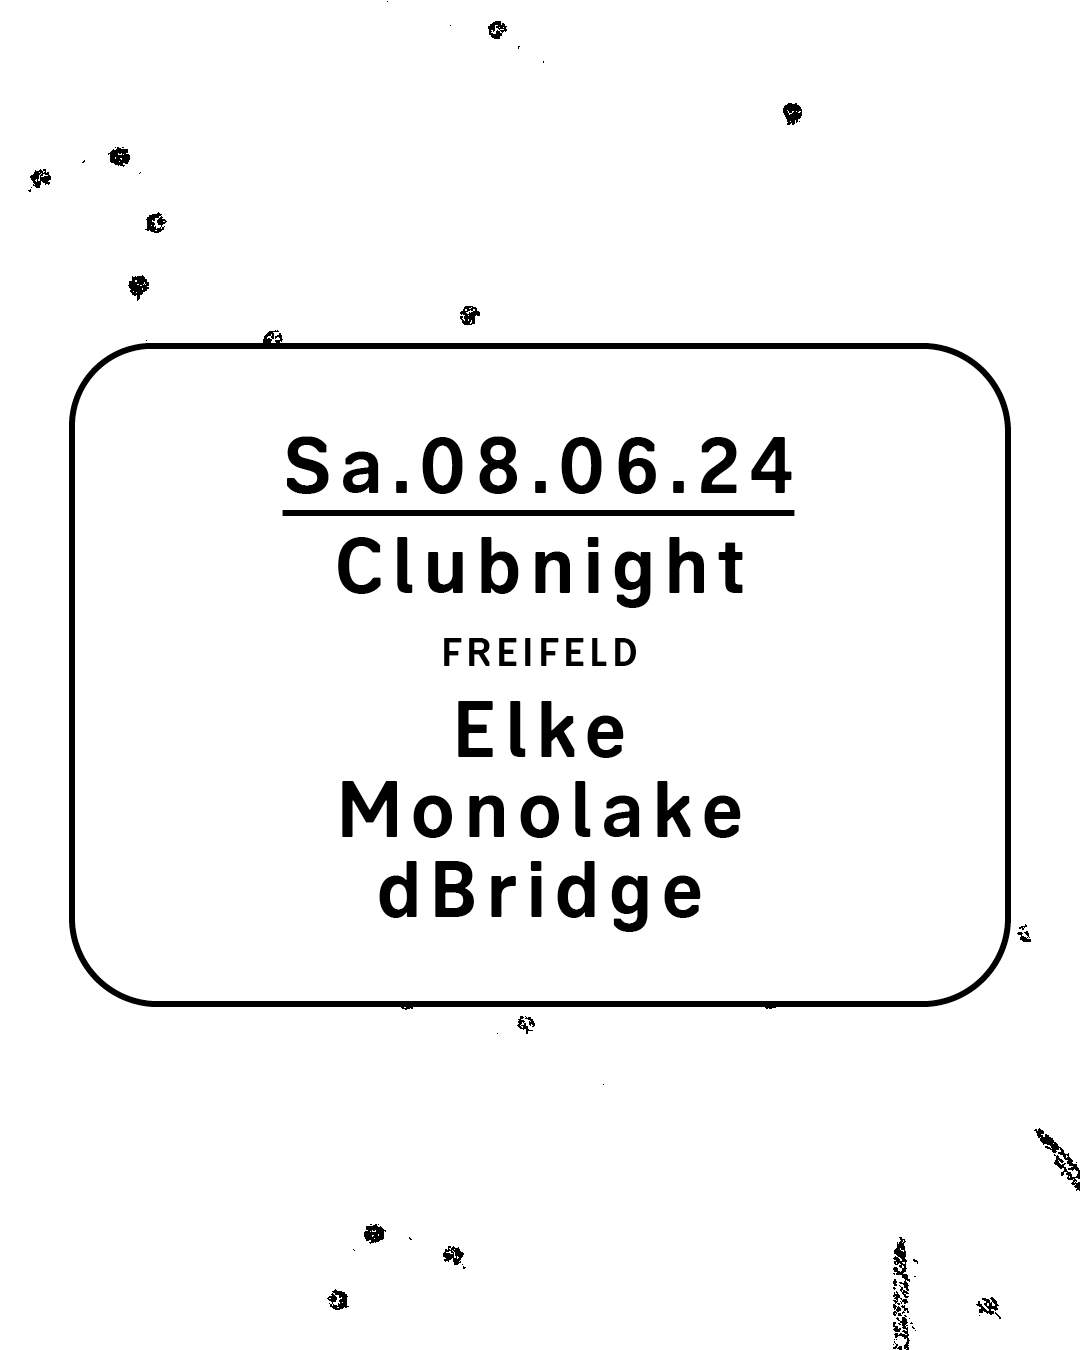 Clubnight - Elke, Monolake, dBridge, Elke - フライヤー裏